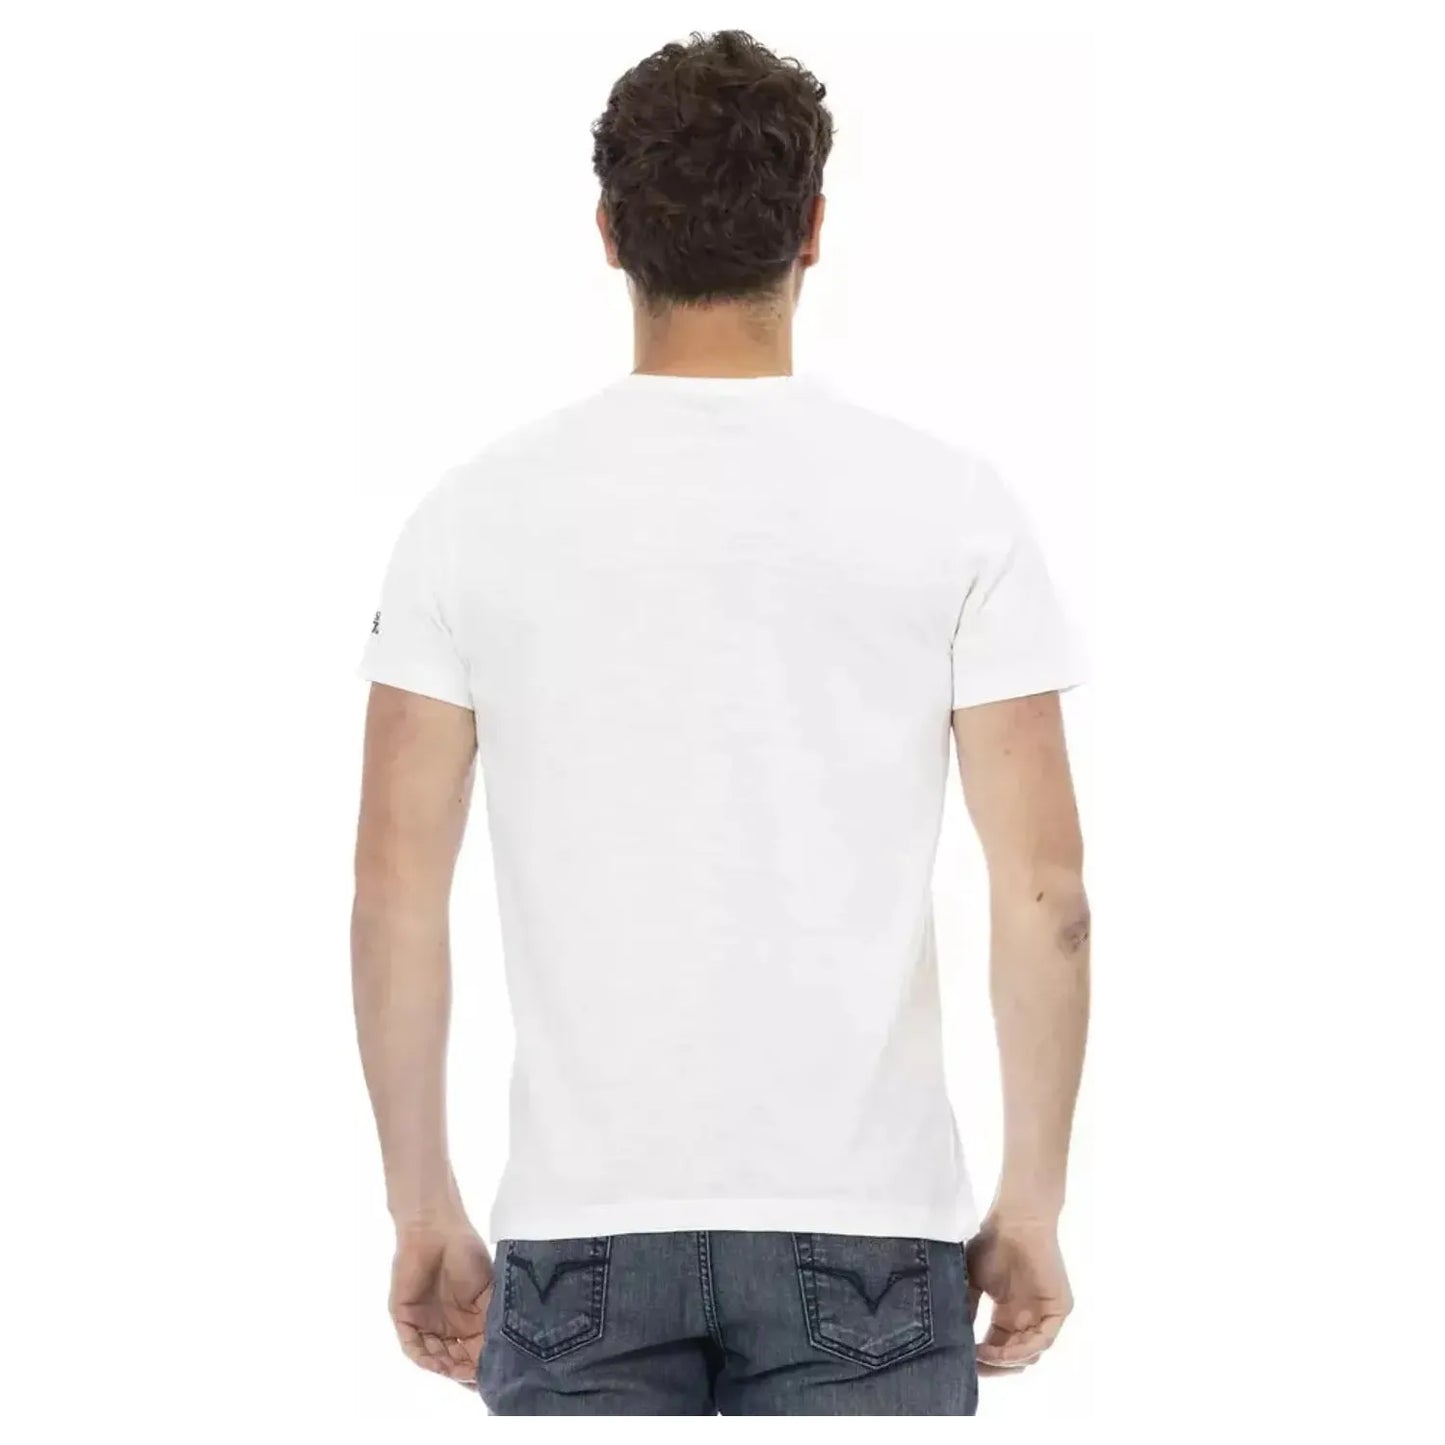 Trussardi Action Sleek Trussardi Action Tee: Chic & Comfy white-cotton-t-shirt-122